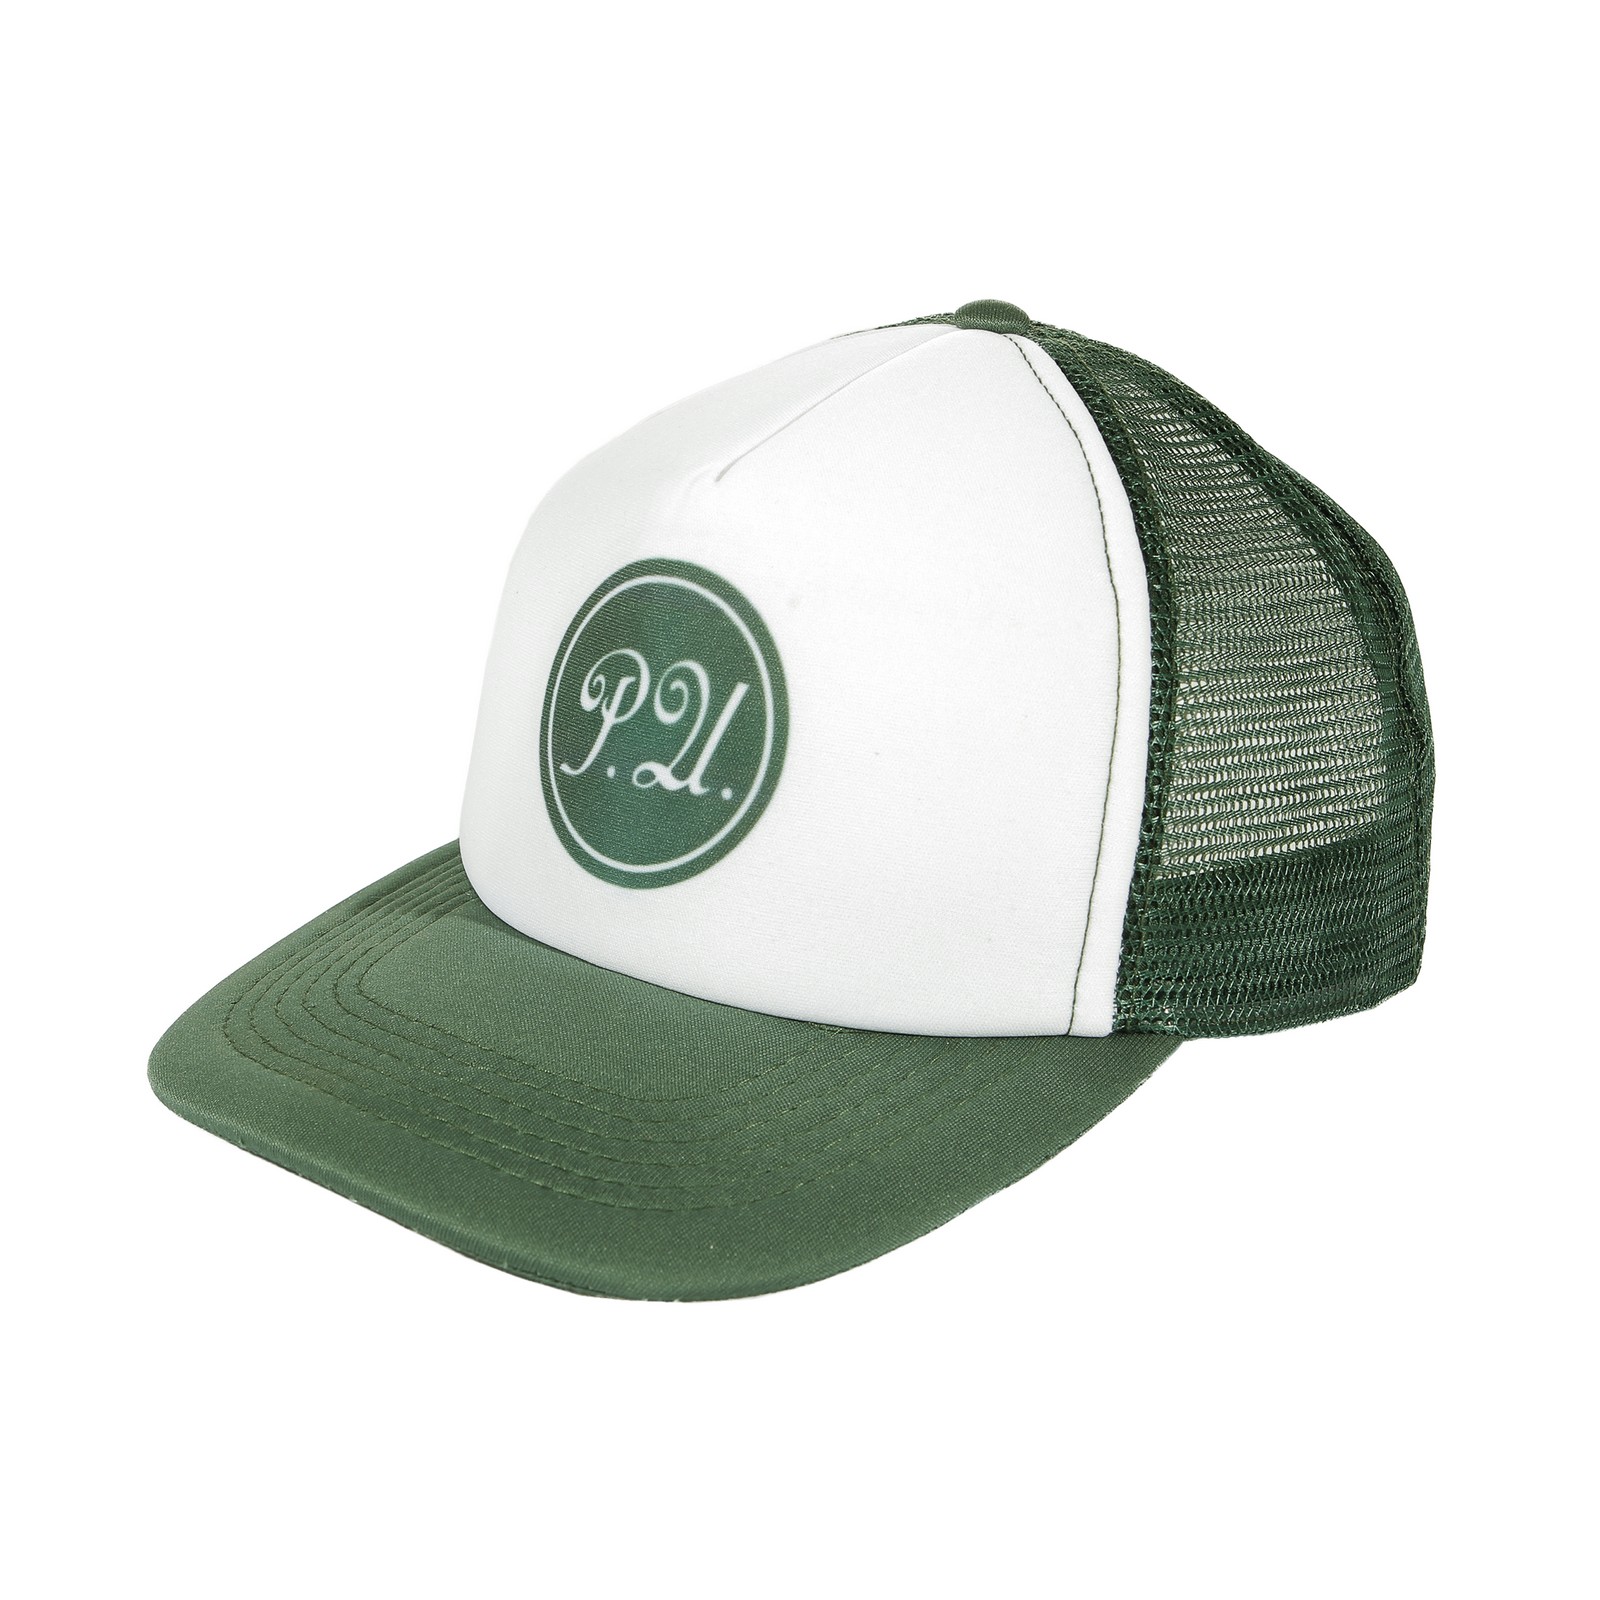 Grüne Kappe mit eigenem Design